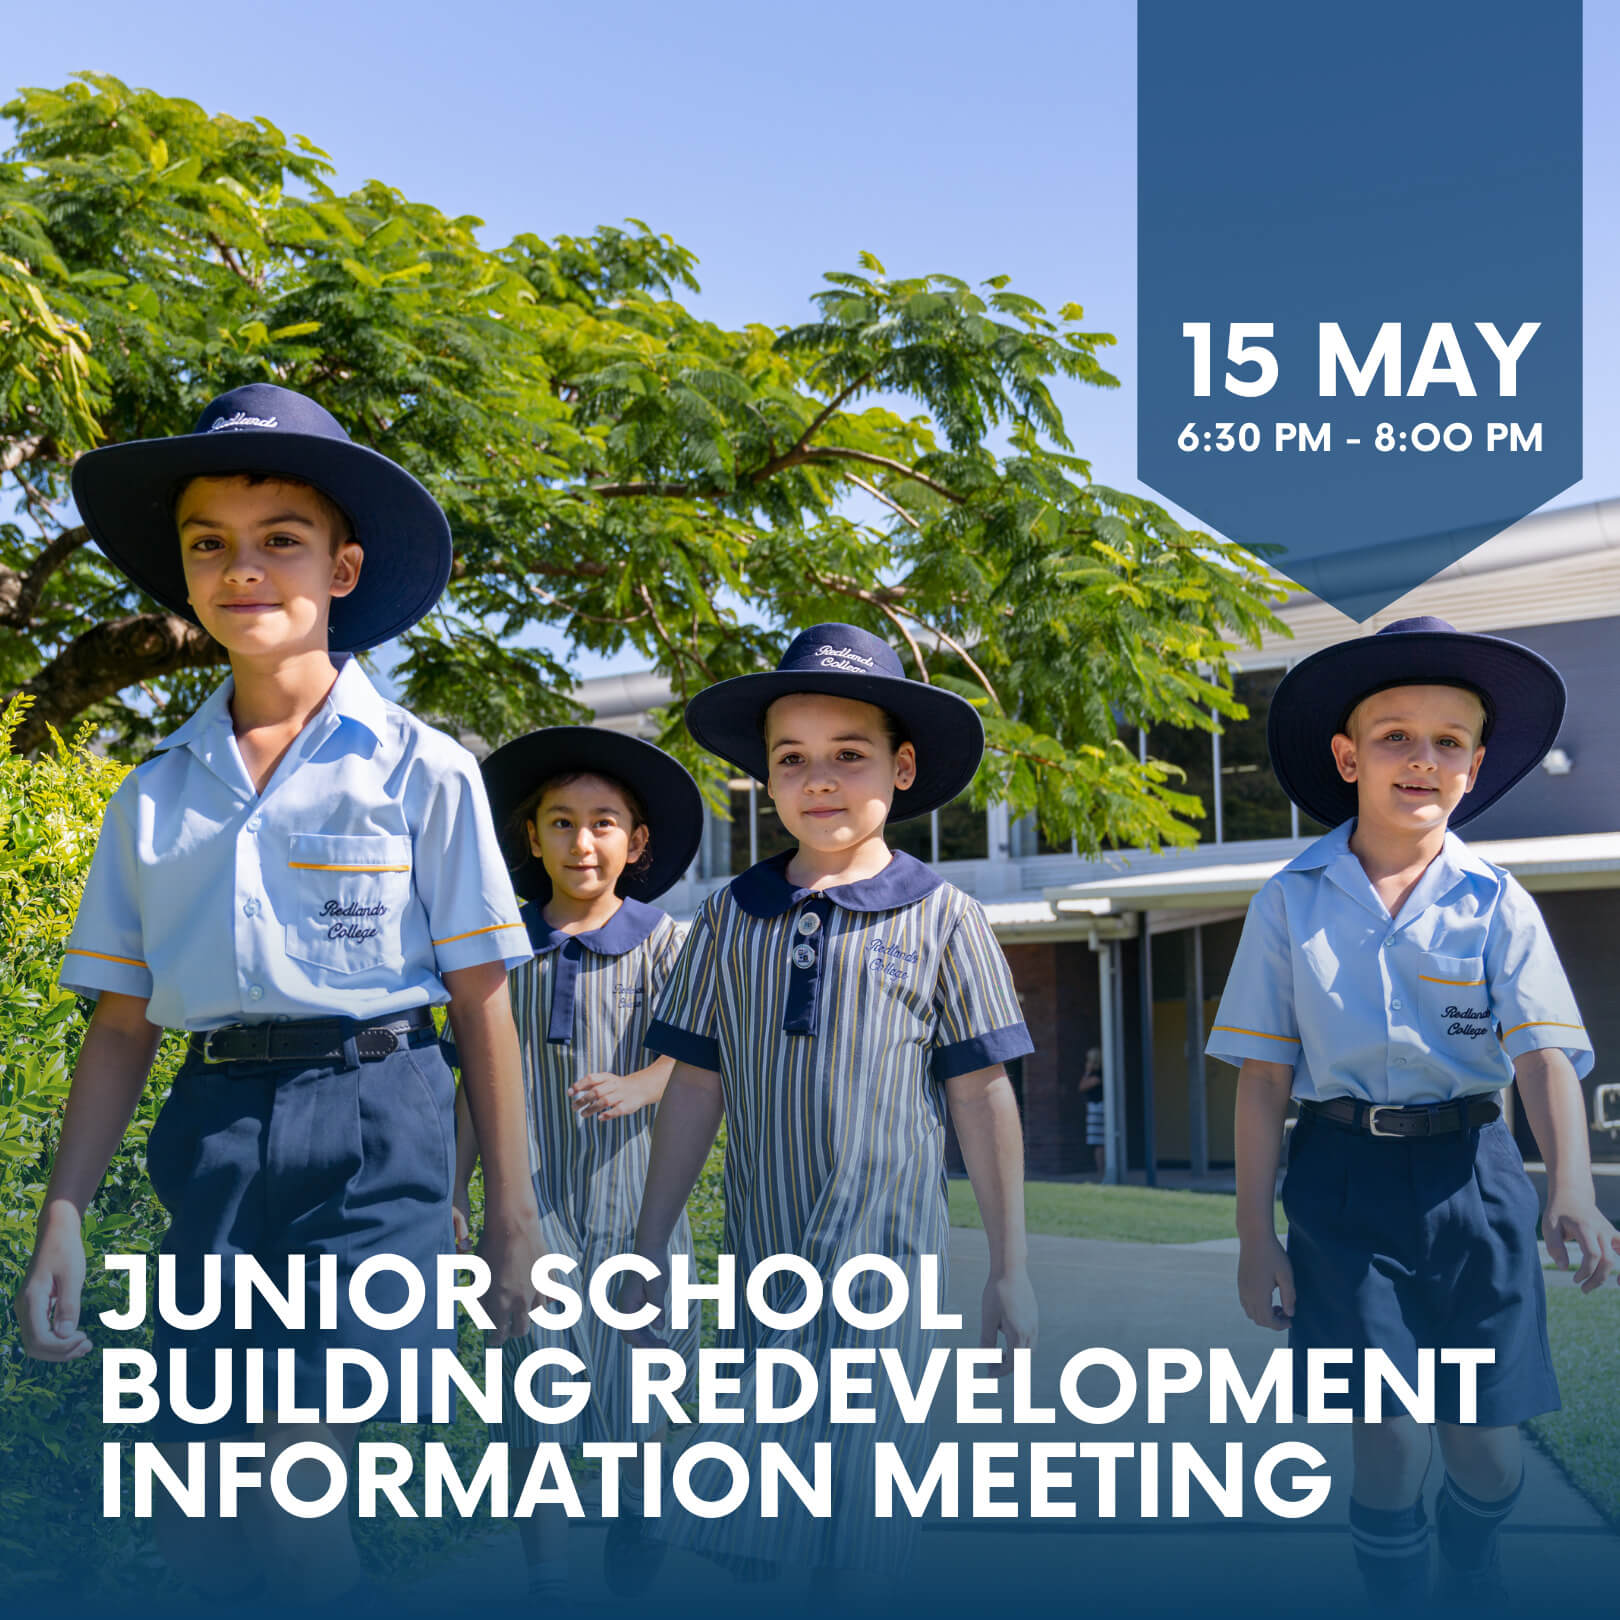 Junior School Building Redevelopment Information Meeting – 15 May